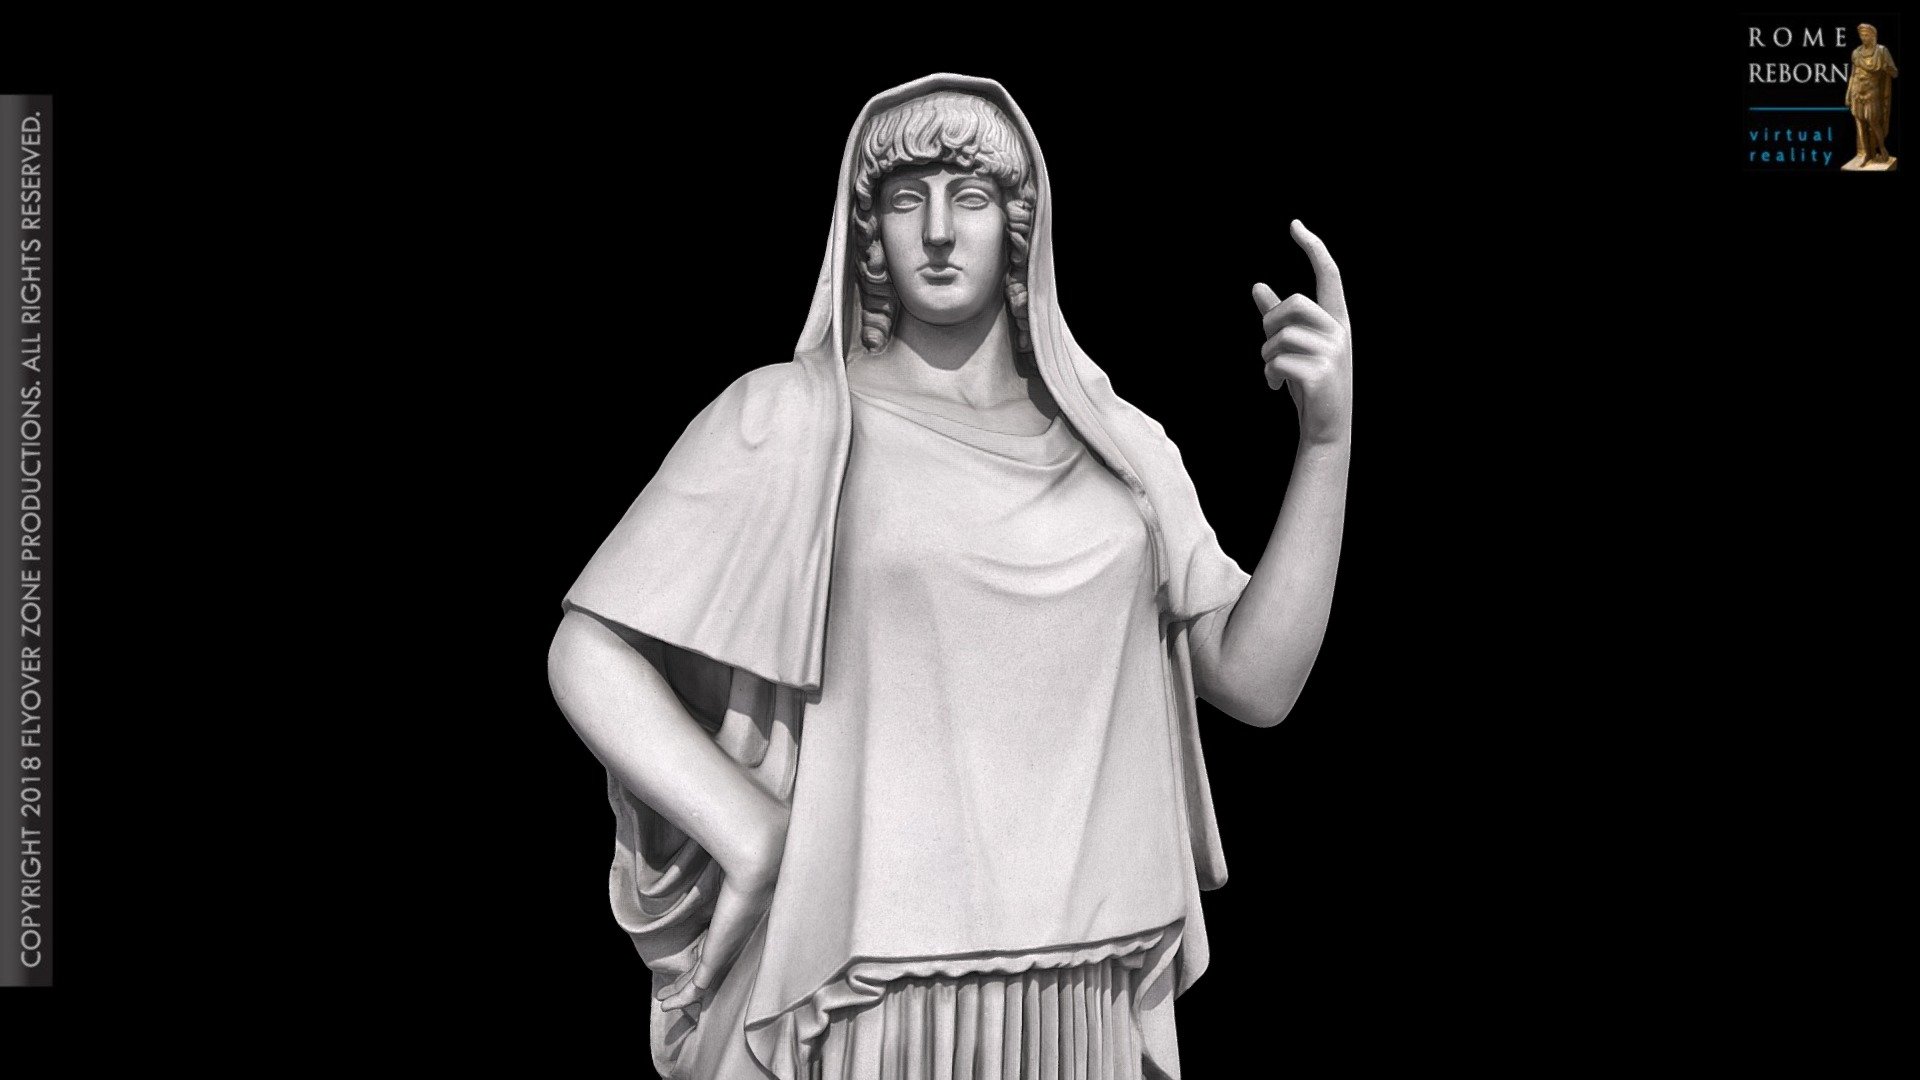 Hera (Hestia Giustiniani)